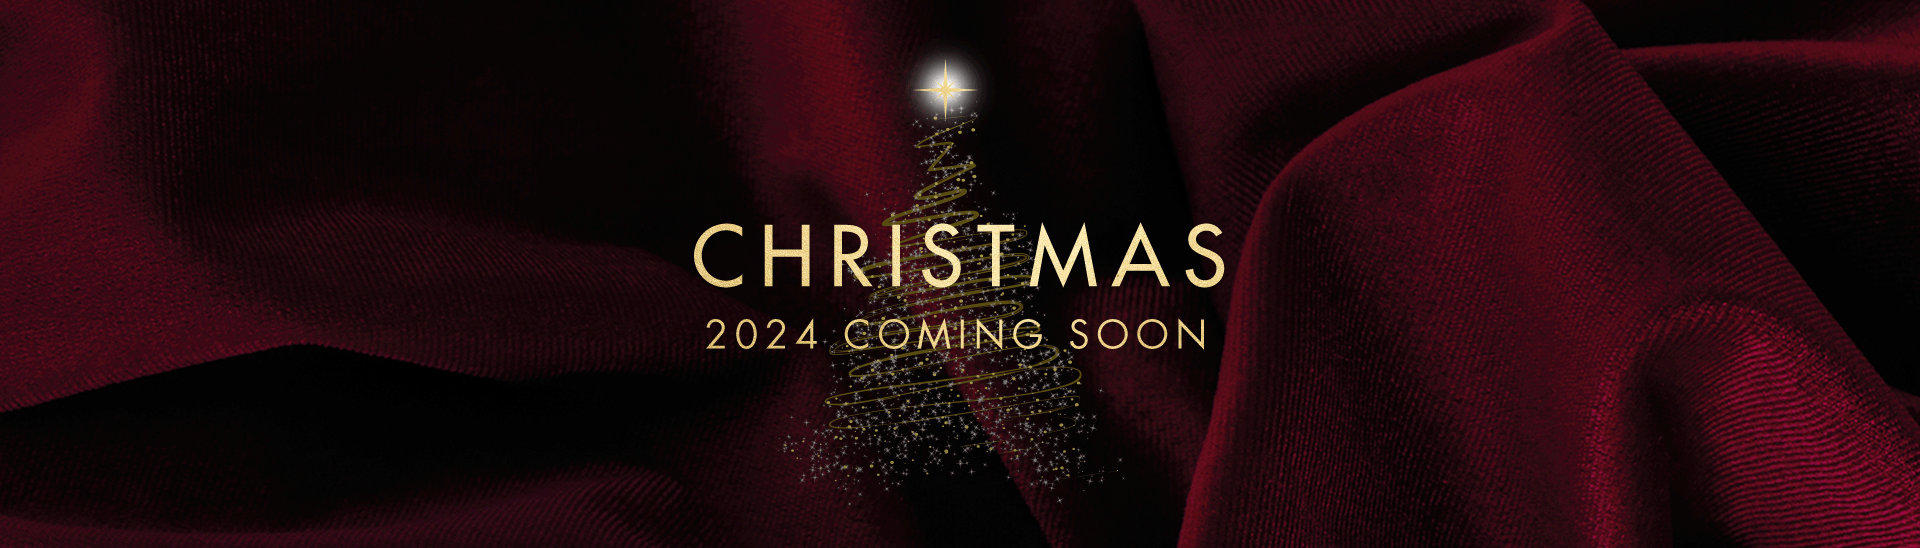 Christmas 2024 at Bromley